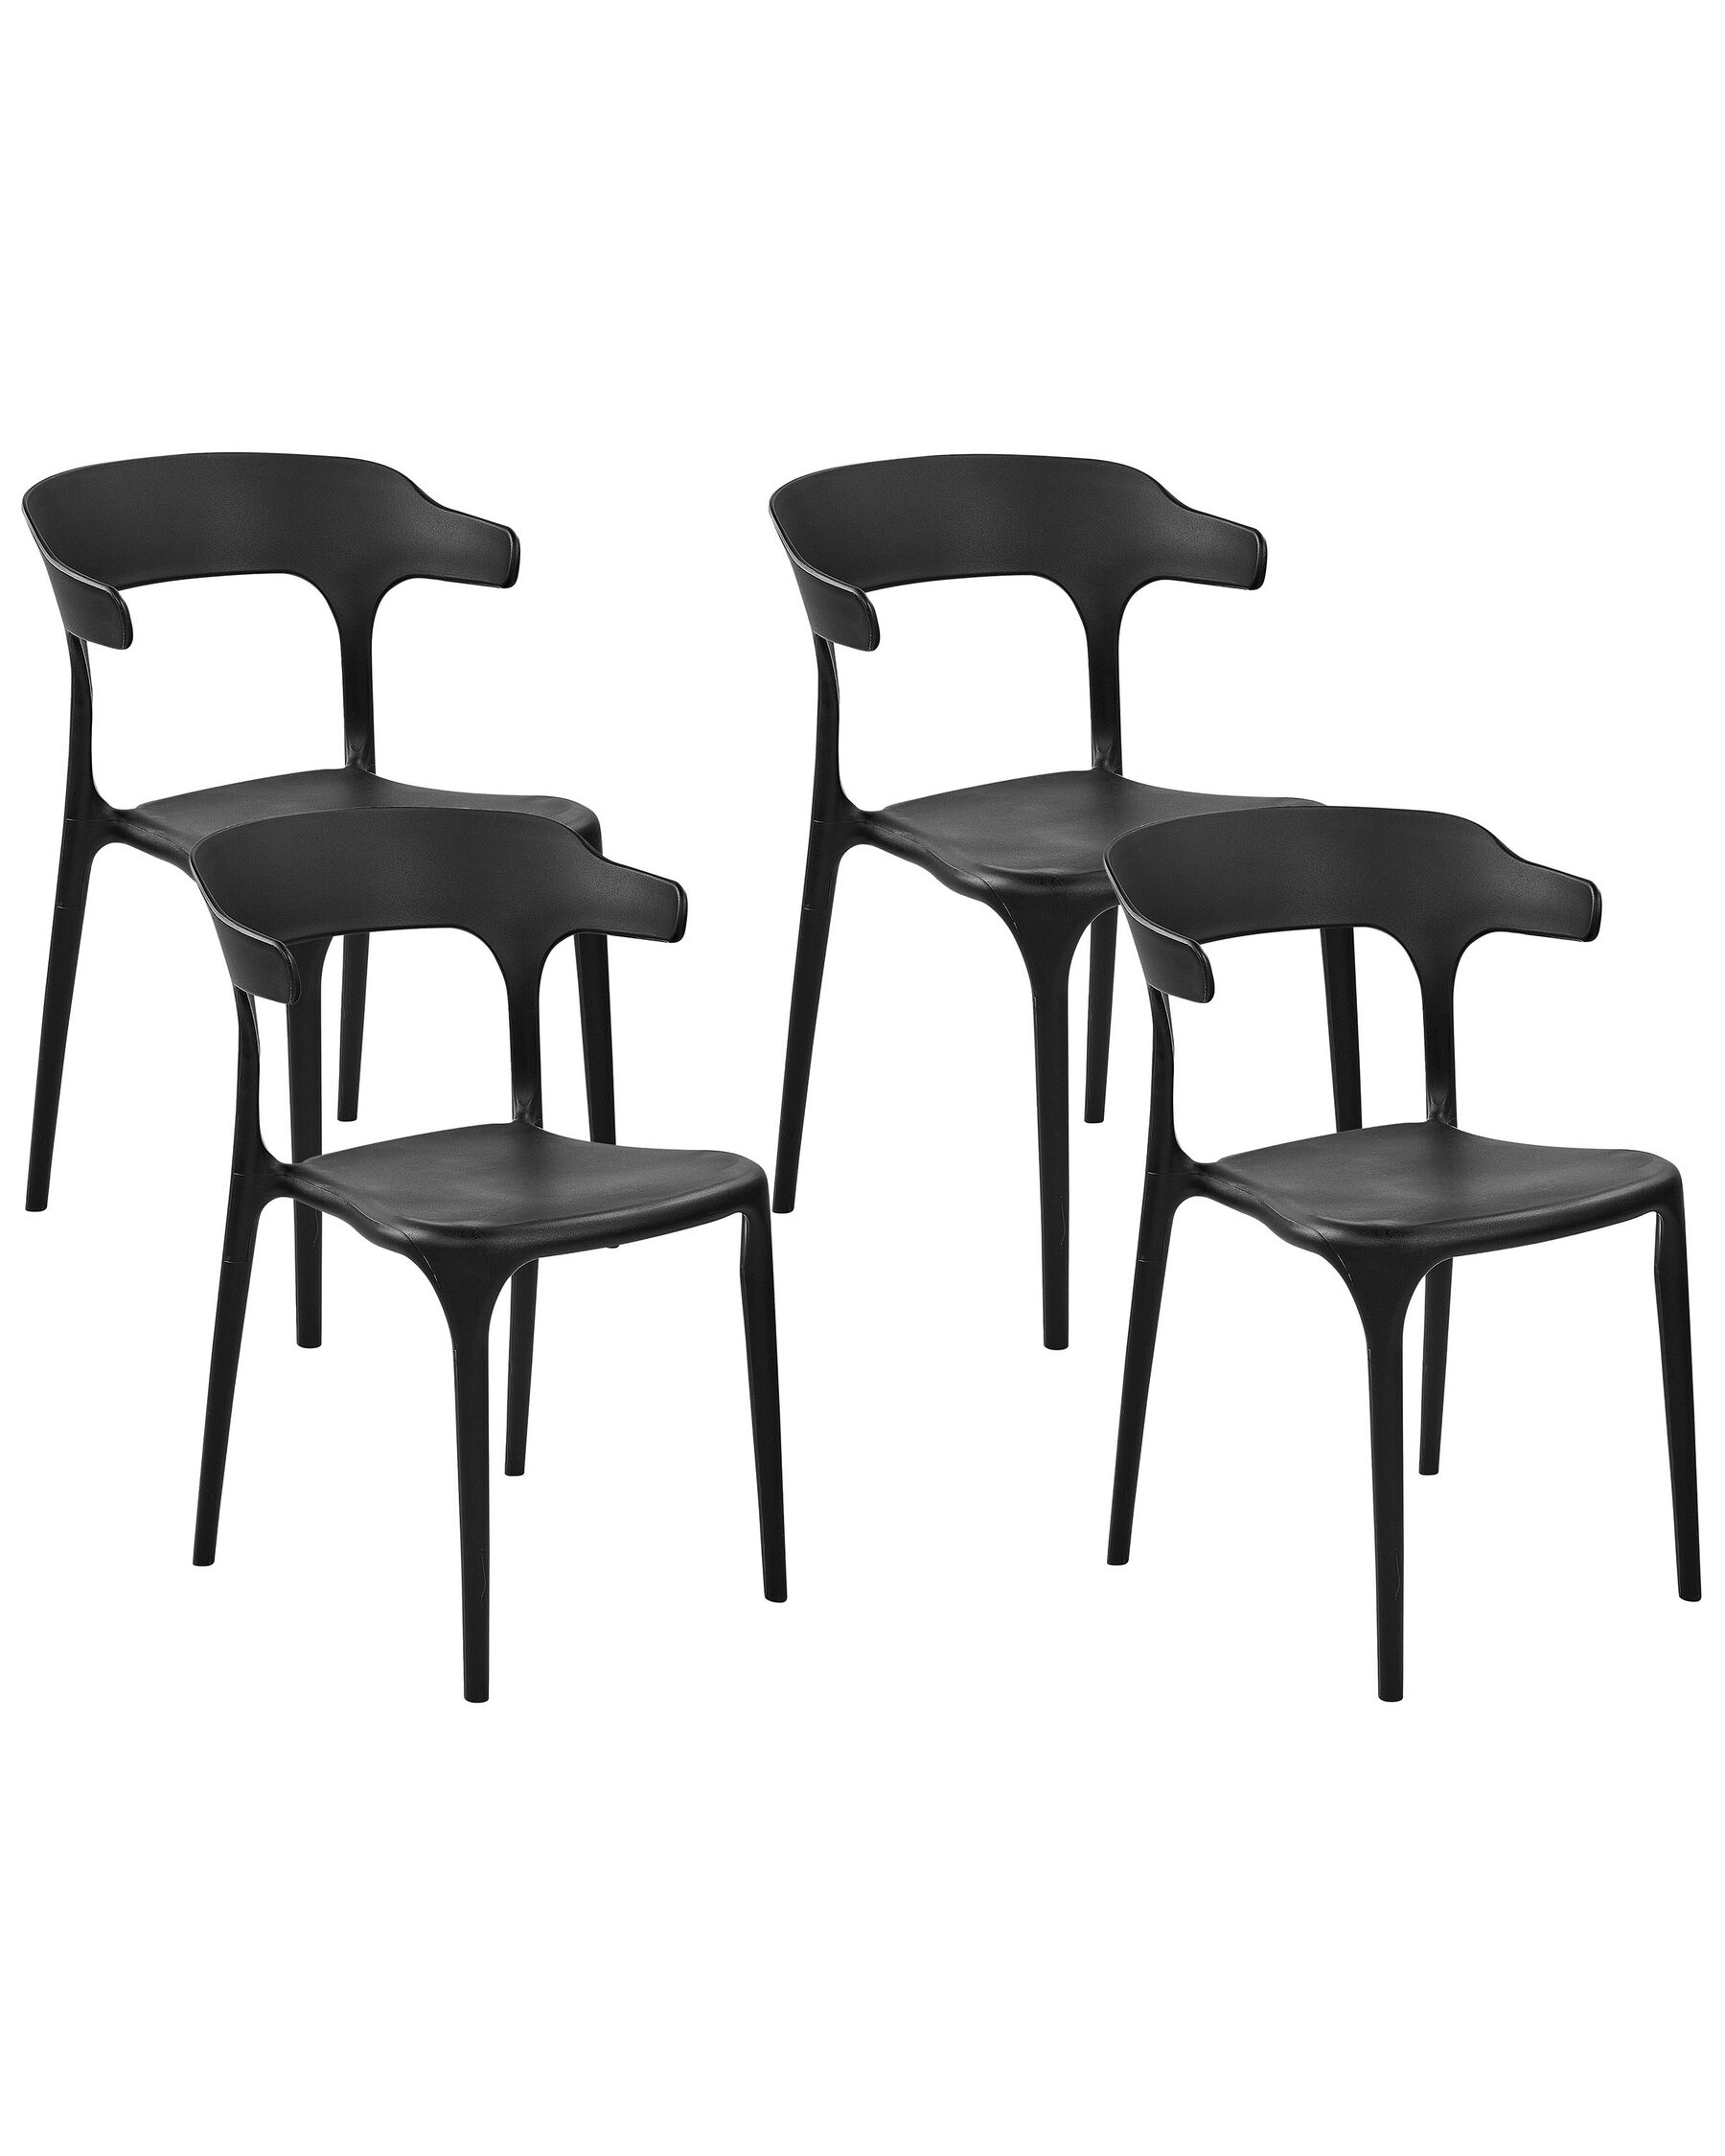 Set of 4 Dining Chairs Black GUBBIO _844329